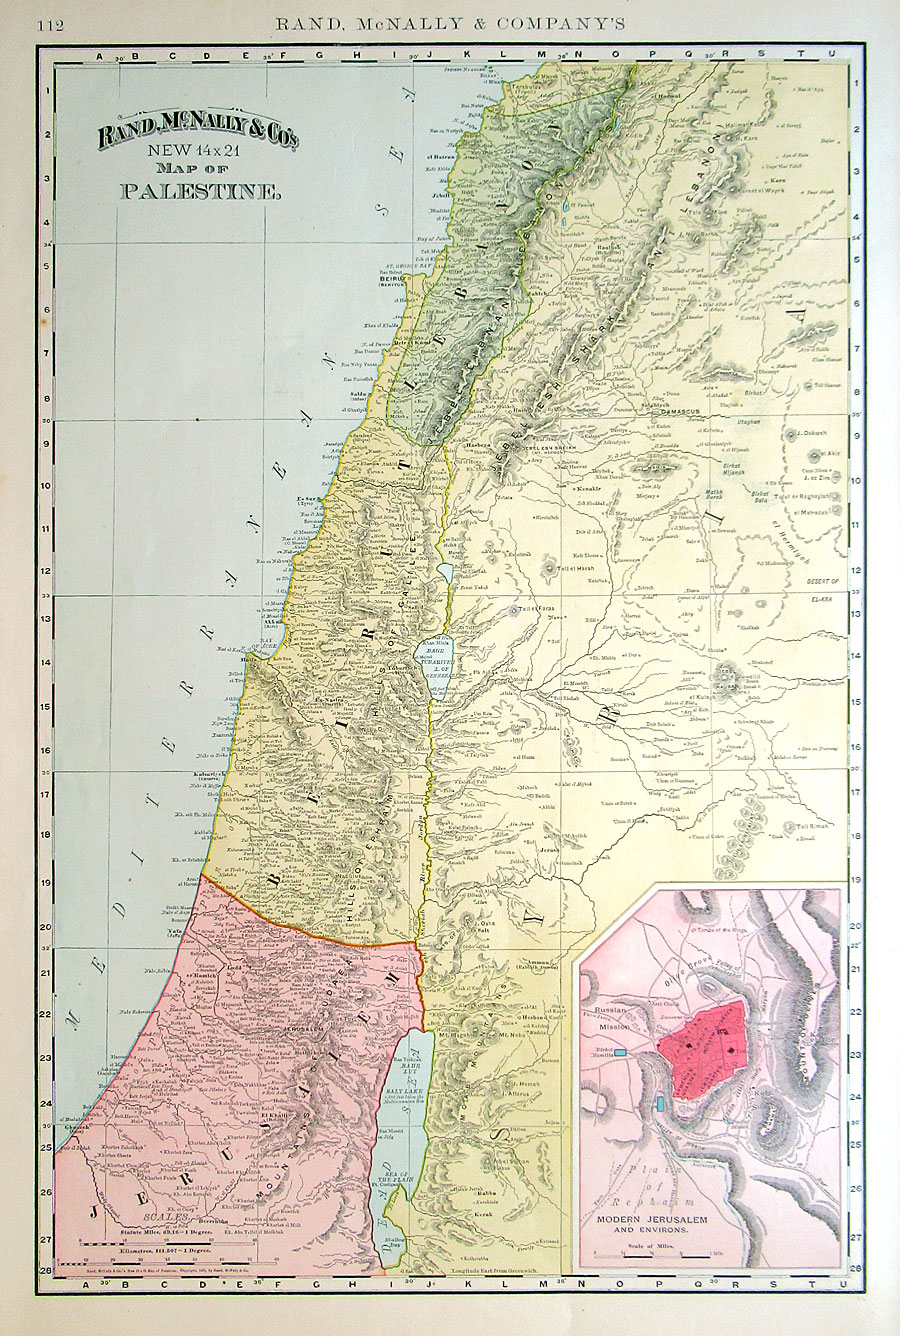 c 1895 Rand, McNally & Co map of Palestine